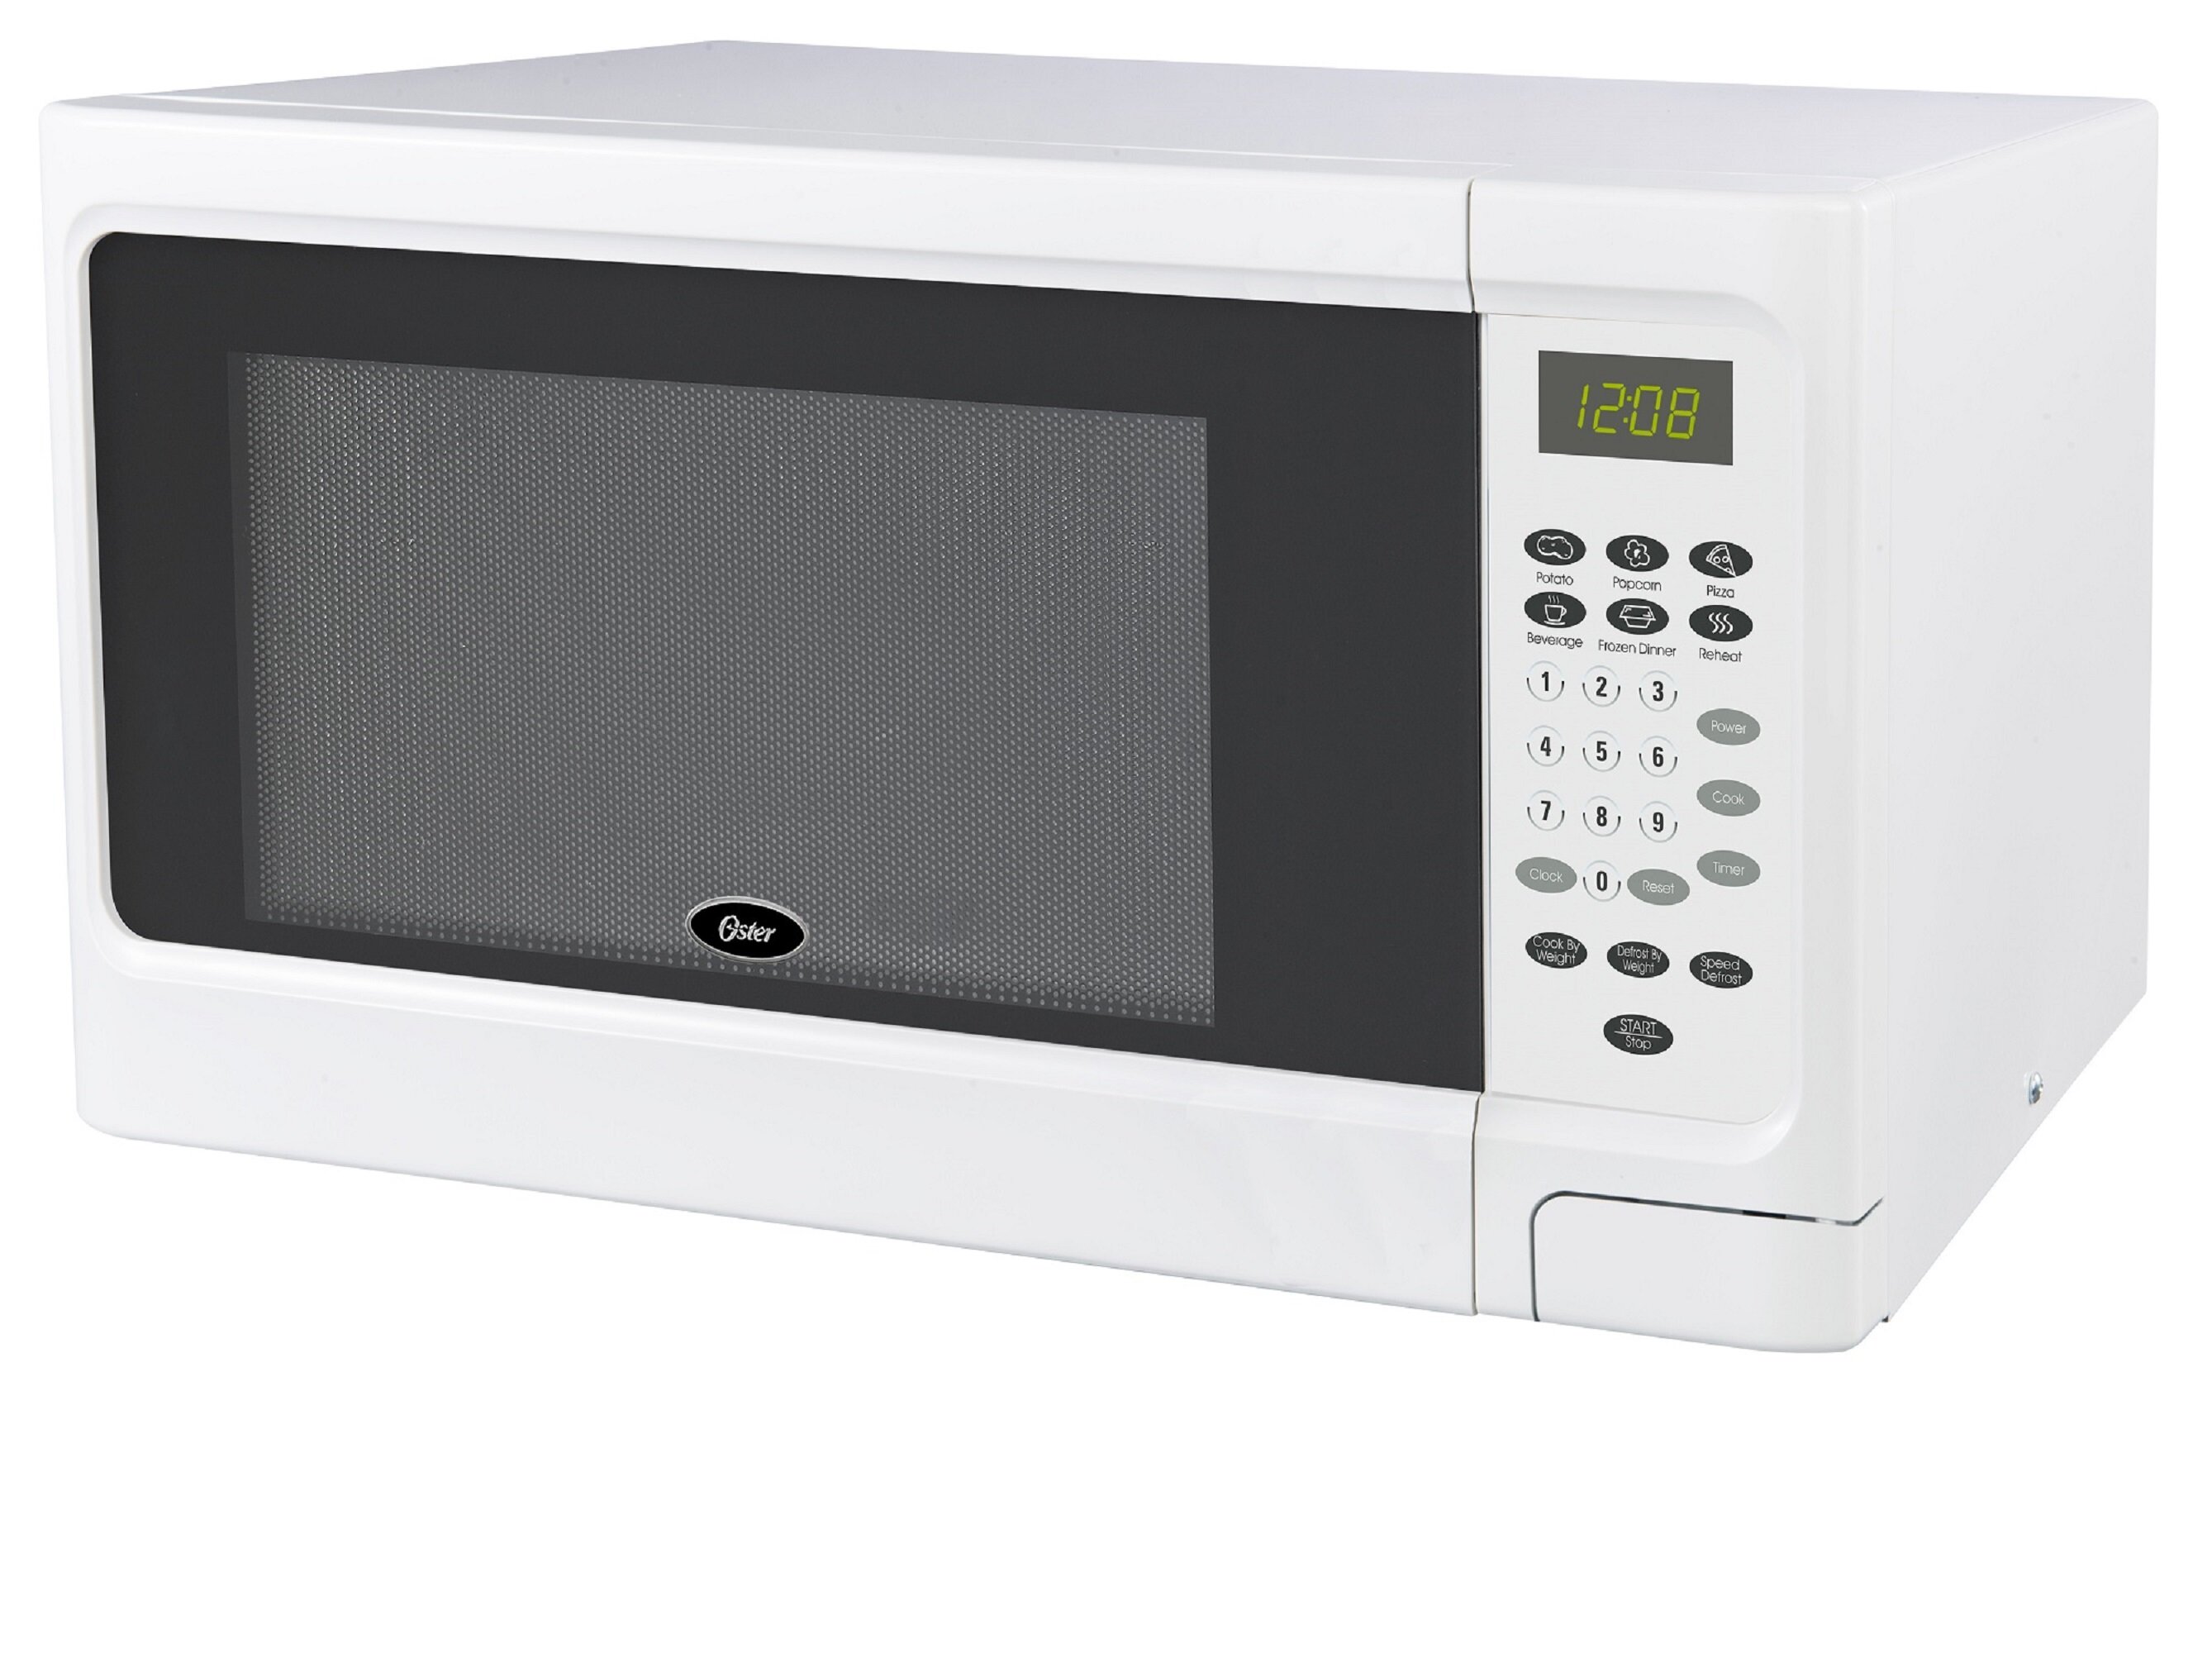 Oster 21 22 1 1 Cu Ft Countertop Microwave Reviews Wayfair